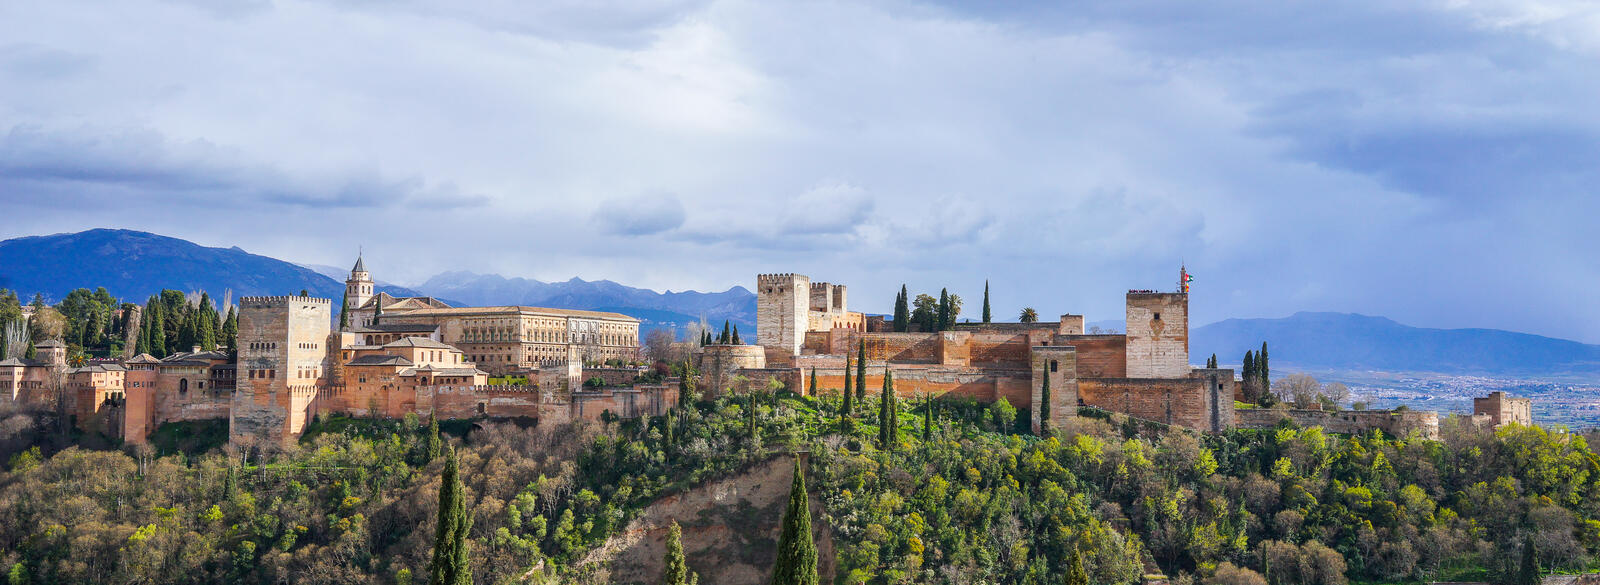 Обои Альгамбра Испания панорама на рабочий стол